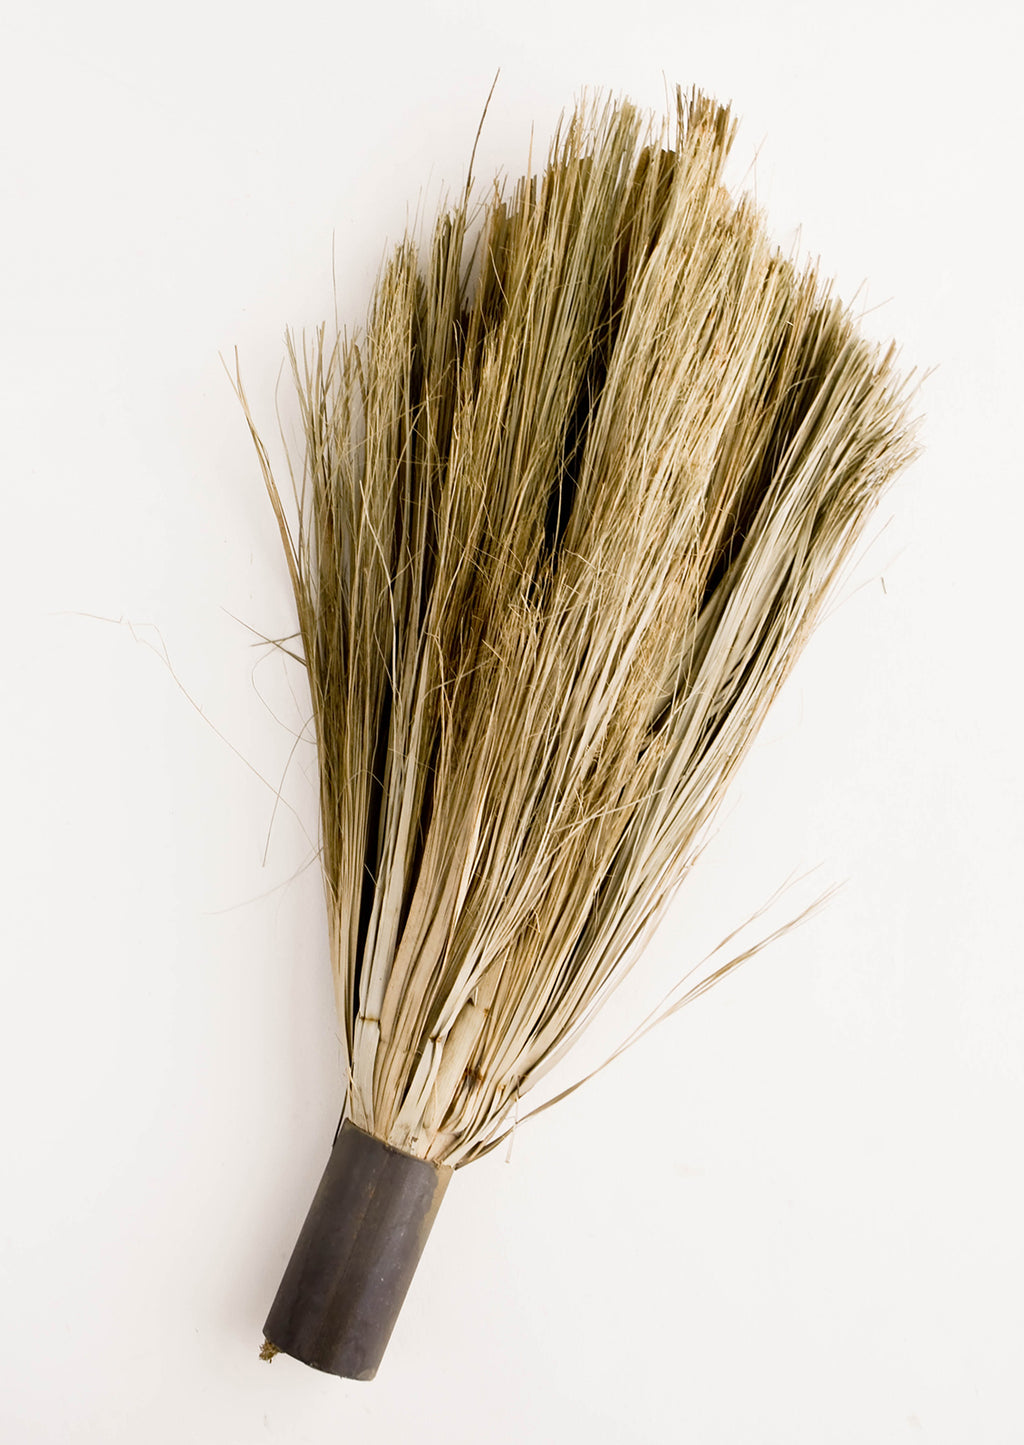 1: Primitive style handheld broom with cylindrical metal handle